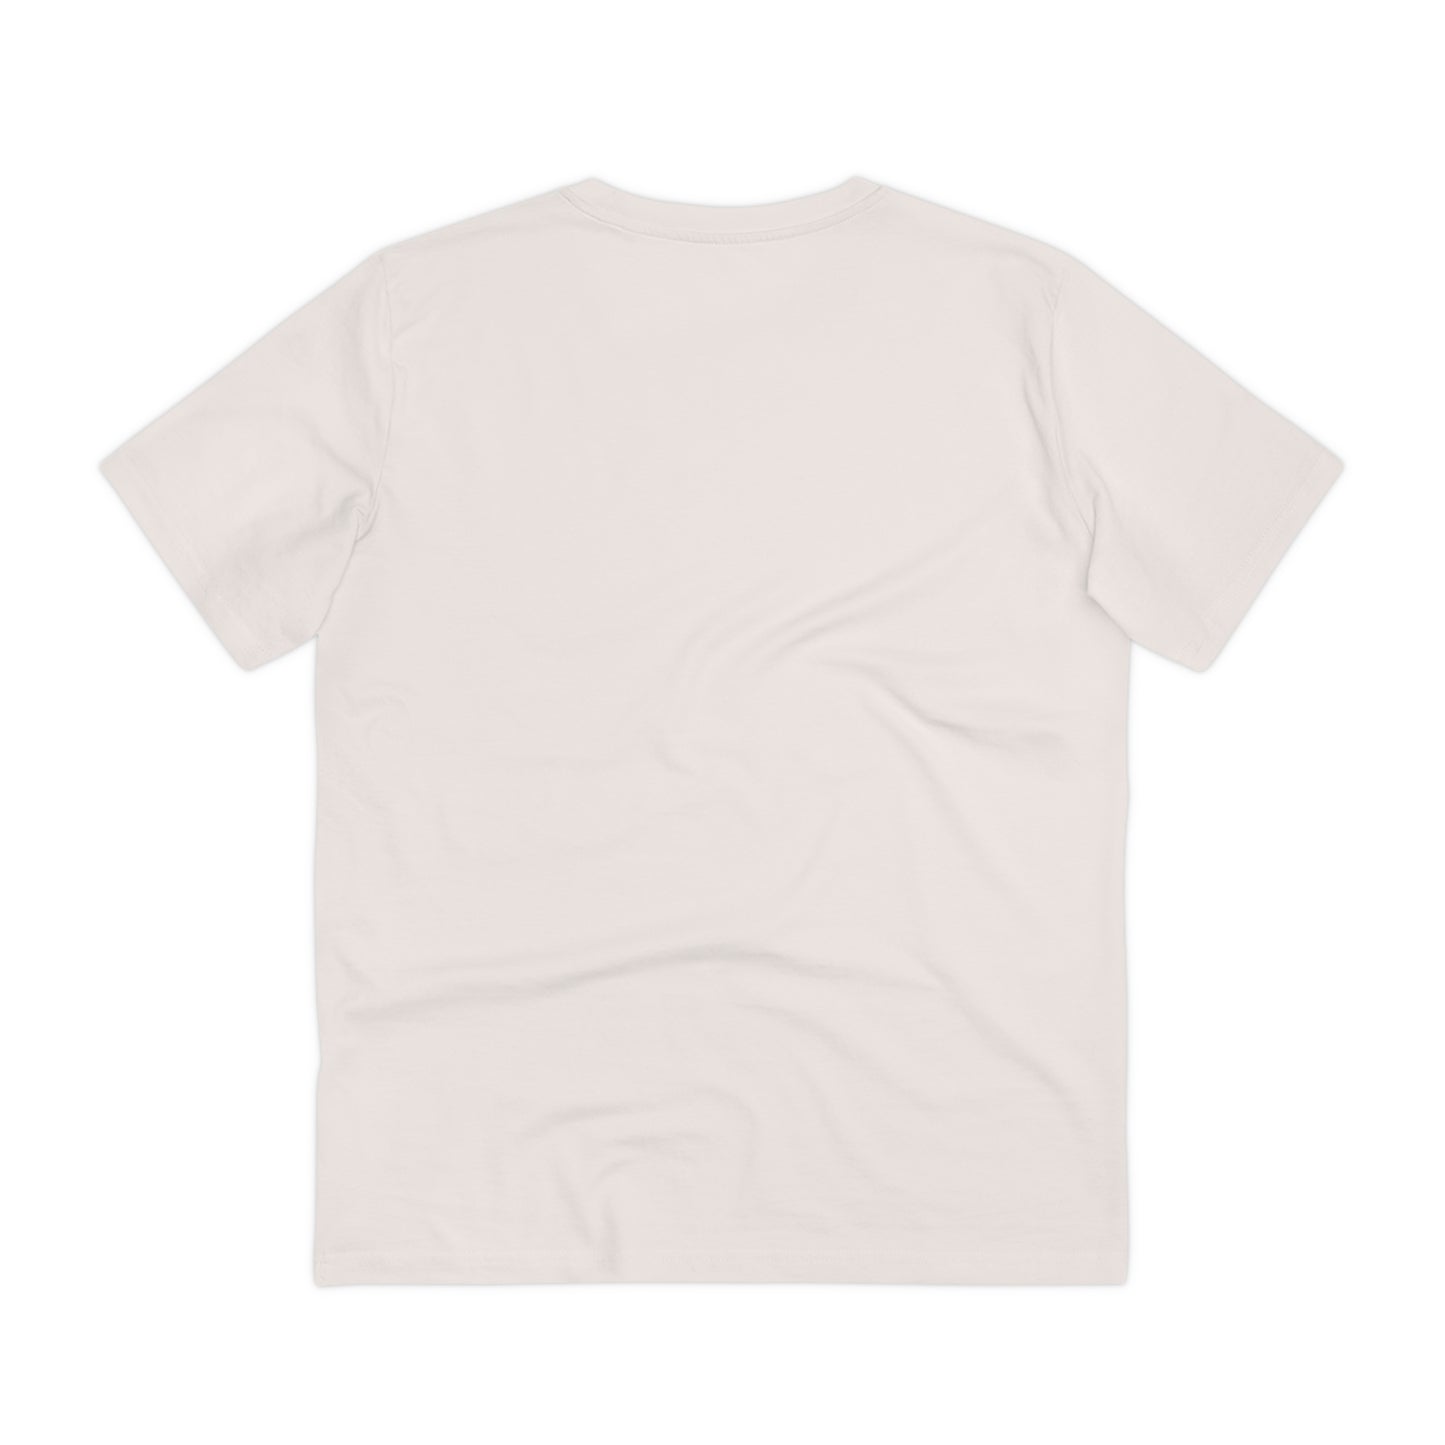 Justabarth T-Shirt #7